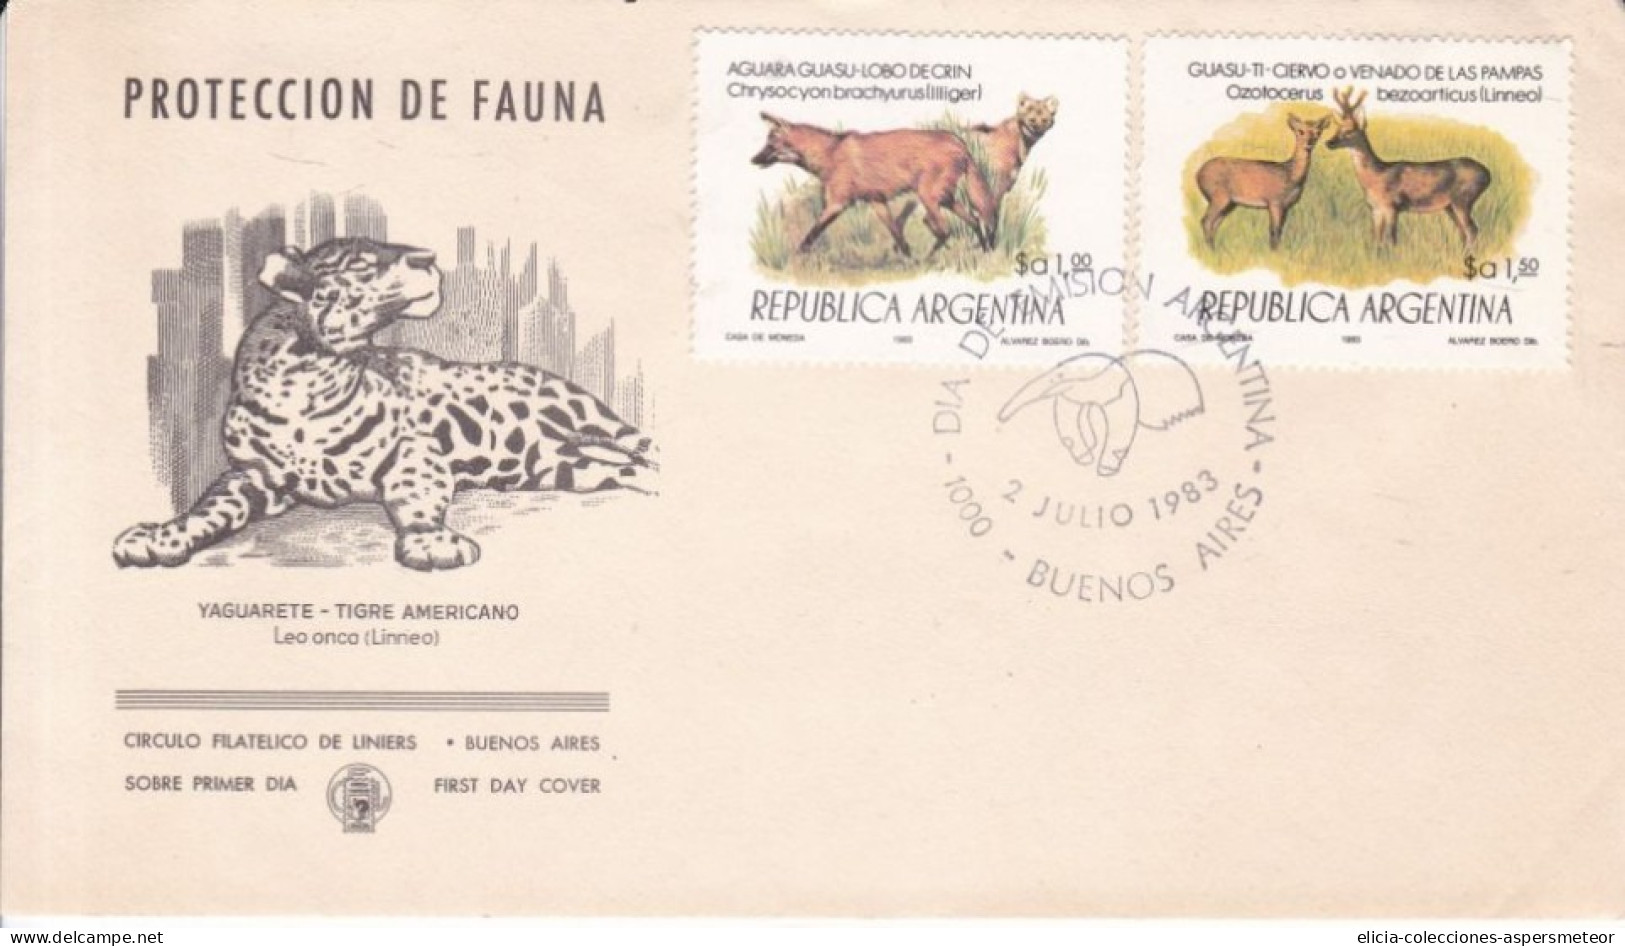 Argentina - 1983 - Envelope - First Day Issue Postmark - Fauna Protection -  Aguara Guasu And Guasu Ti Stamps - Caja 30 - Gebruikt